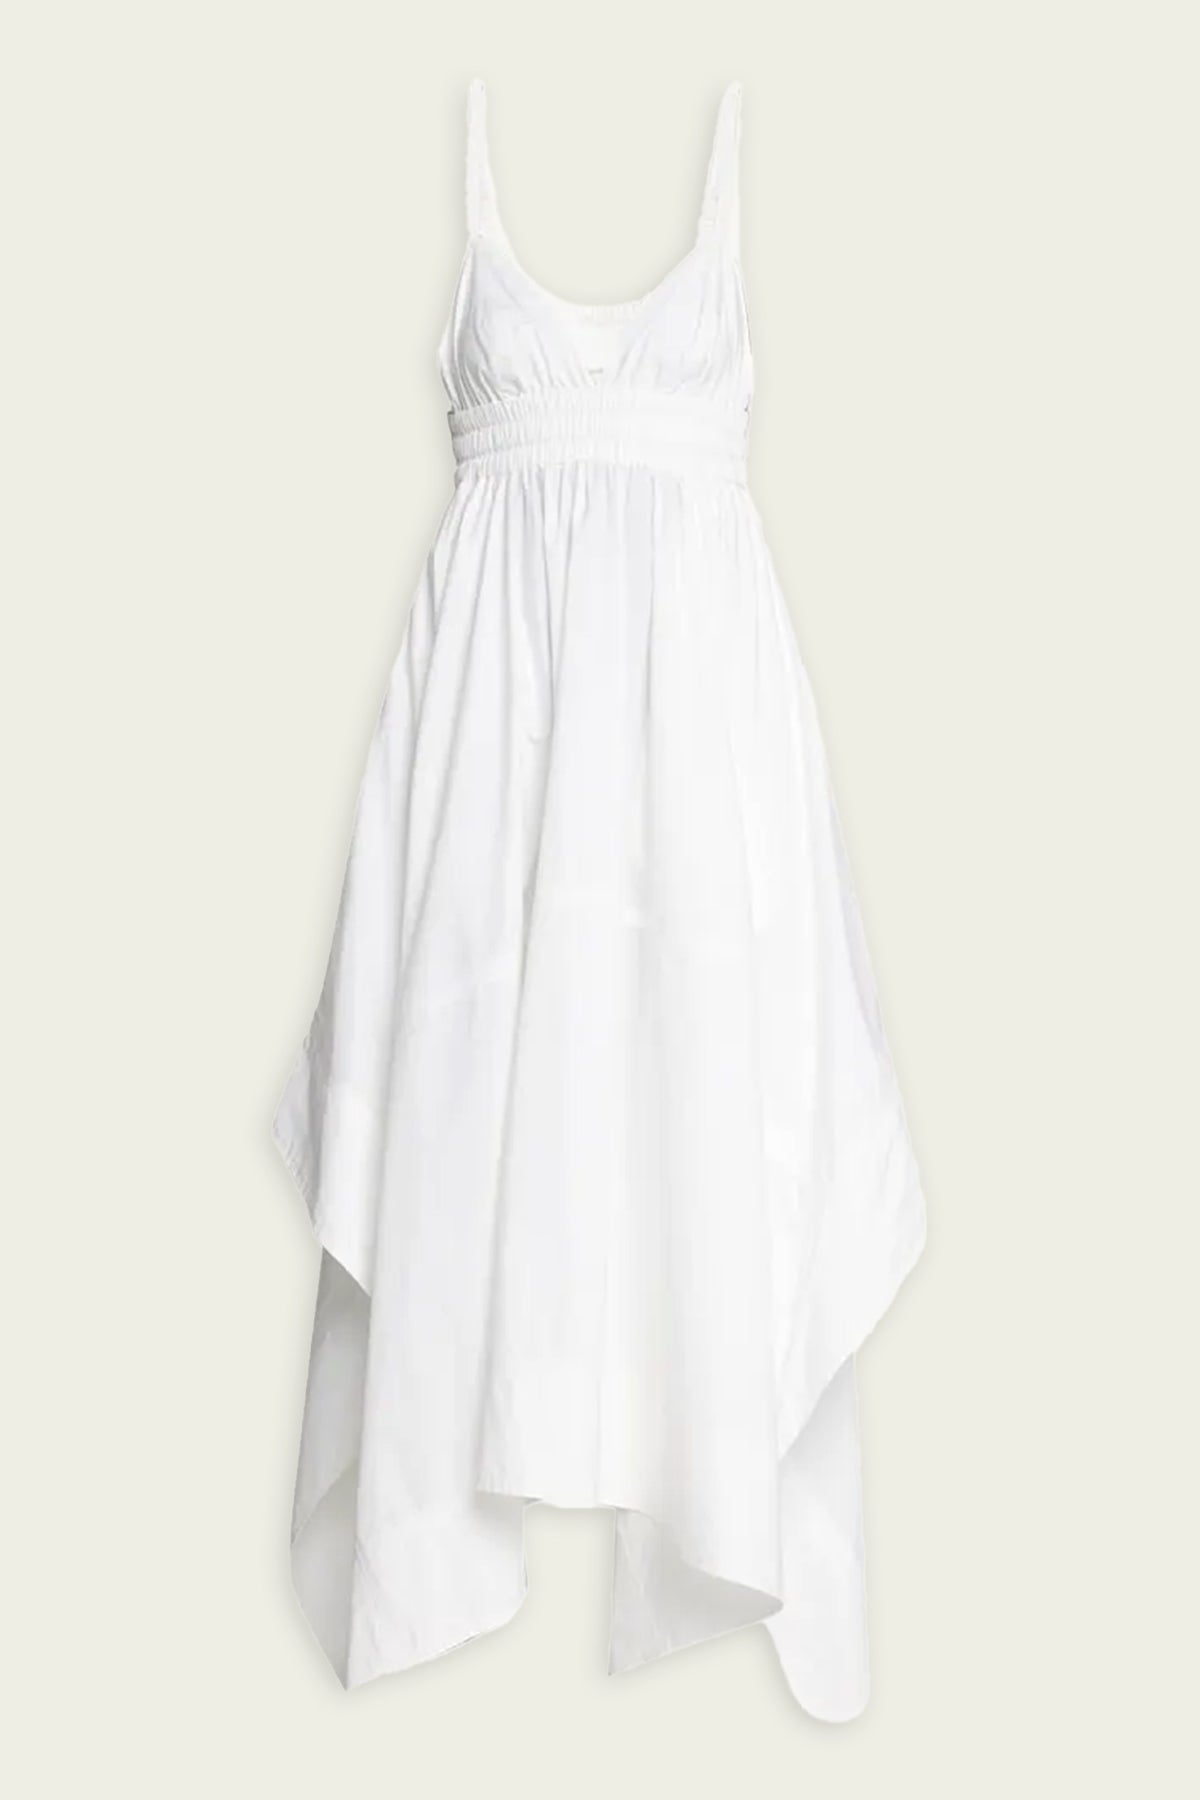 Rosie Handkerchief Maxi Dress in White - shop-olivia.com